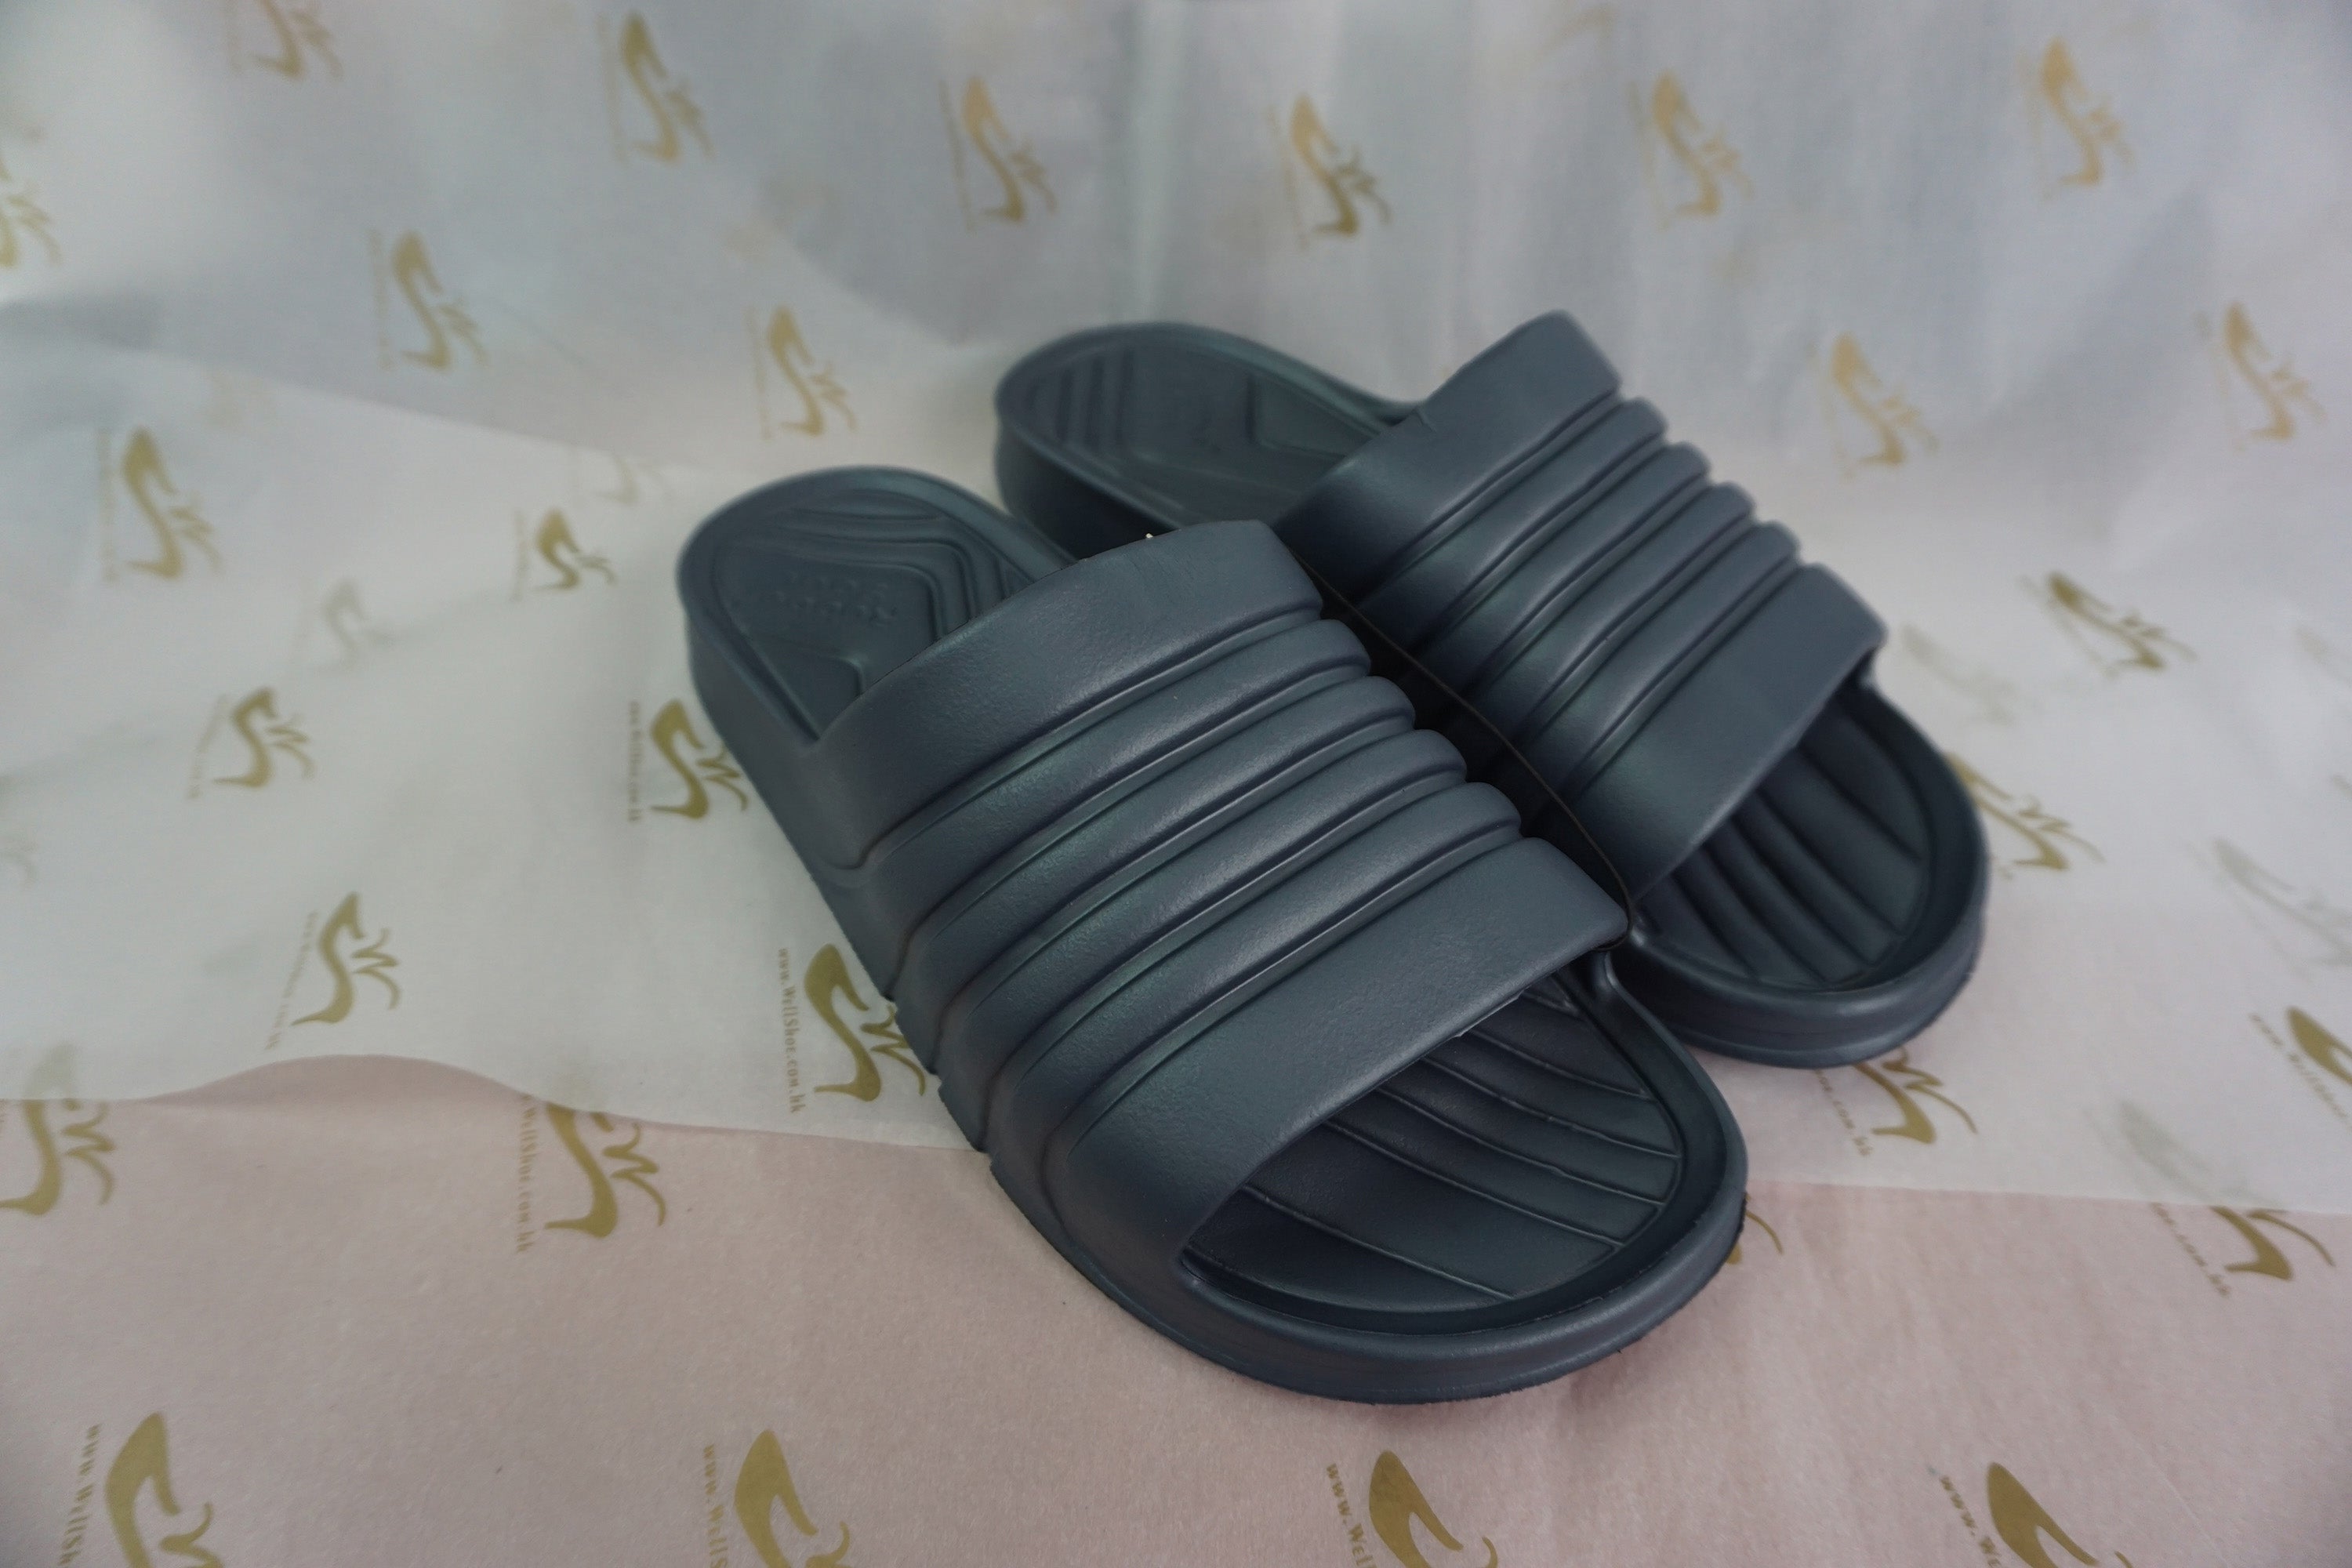 T3328 Casual Sandals (Thailand Made)-FLEX-NY-US Size: 10-偉豐鞋 WELL SHOE HK-Well Shoe-偉豐鞋-偉豐網-荃灣鞋店-Functional shoes-Hong Kong Tsuen Wan Shoe Store-Tai Wan Shoe-Japan Shoe-高品質功能鞋-台灣進口鞋-日本進口鞋-High-quality shoes-鞋類配件-荃灣進口鞋-香港鞋店-優質鞋類產品-水靴-帆布鞋-廚師鞋-香港鞋品牌-Hong Kong Shoes brand-長者鞋-Hong Kong Rain Boots-Kitchen shoes-Cruthes-Slipper-Well Shoe Hong Kong-Anello-Arriba-休閒鞋-舒適鞋-健康鞋-皮鞋-Healthy shoes-Leather shoes-Hiking shoes